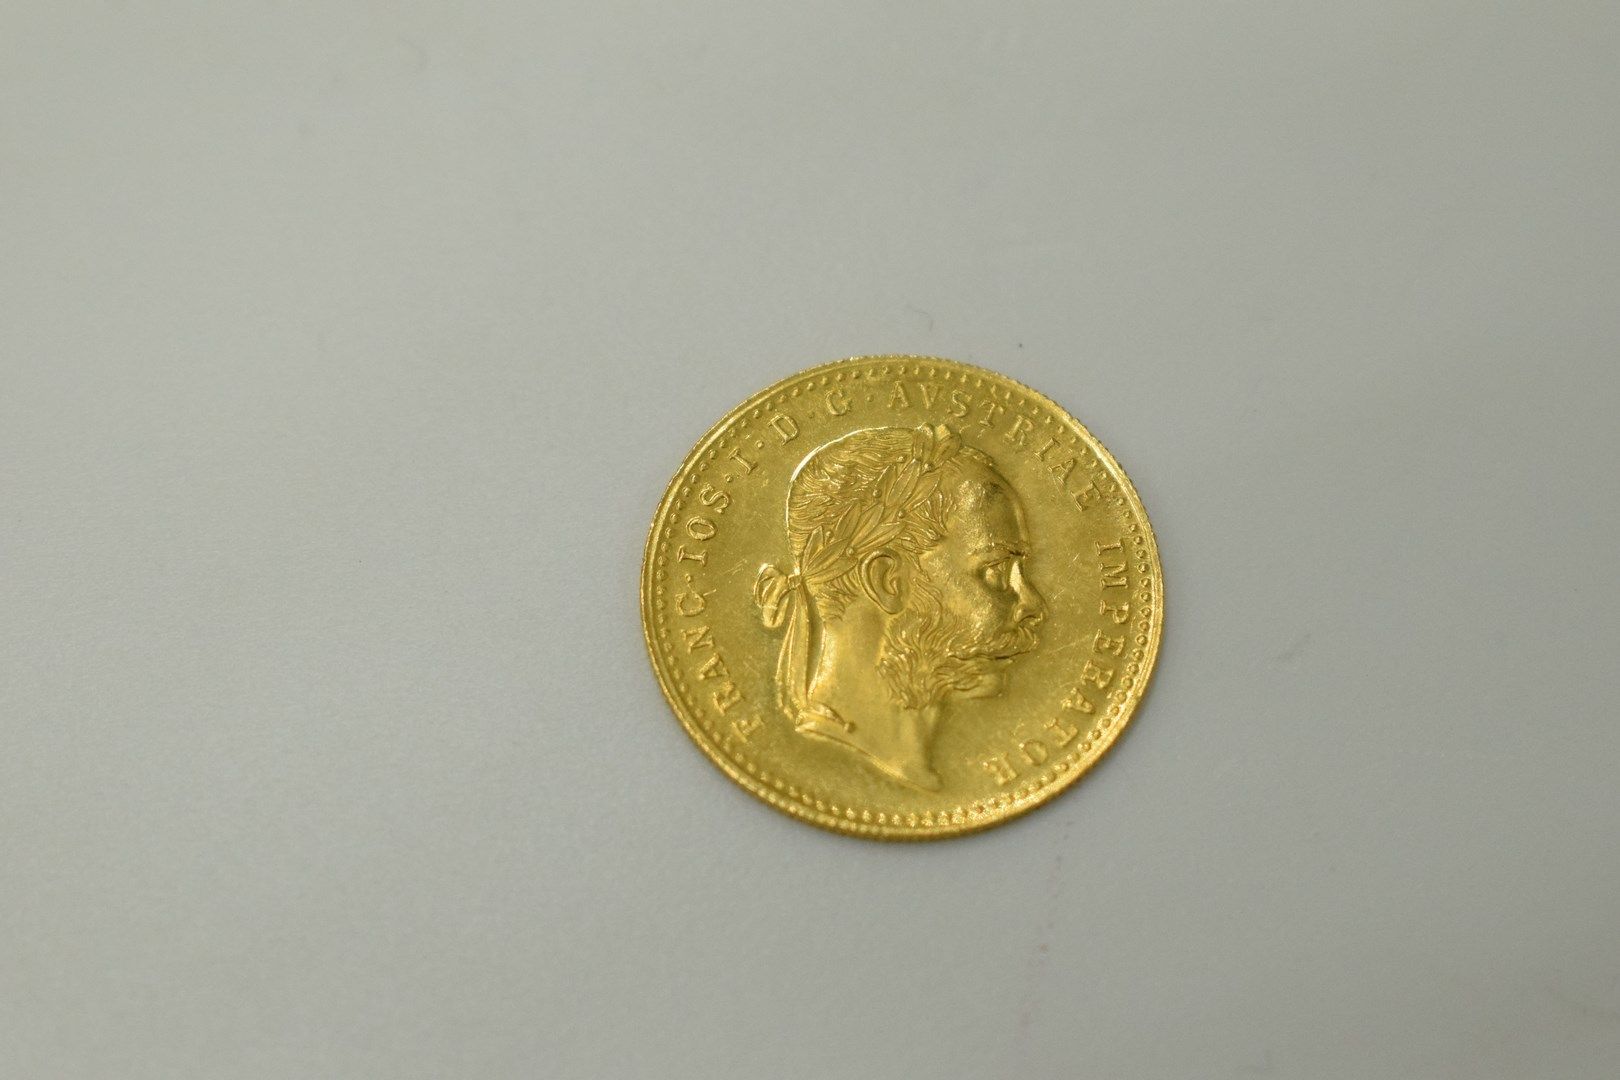 Null 1-Dukaten-Goldmünze Franziskus I. (1915)
Gewicht: 3,4 g.